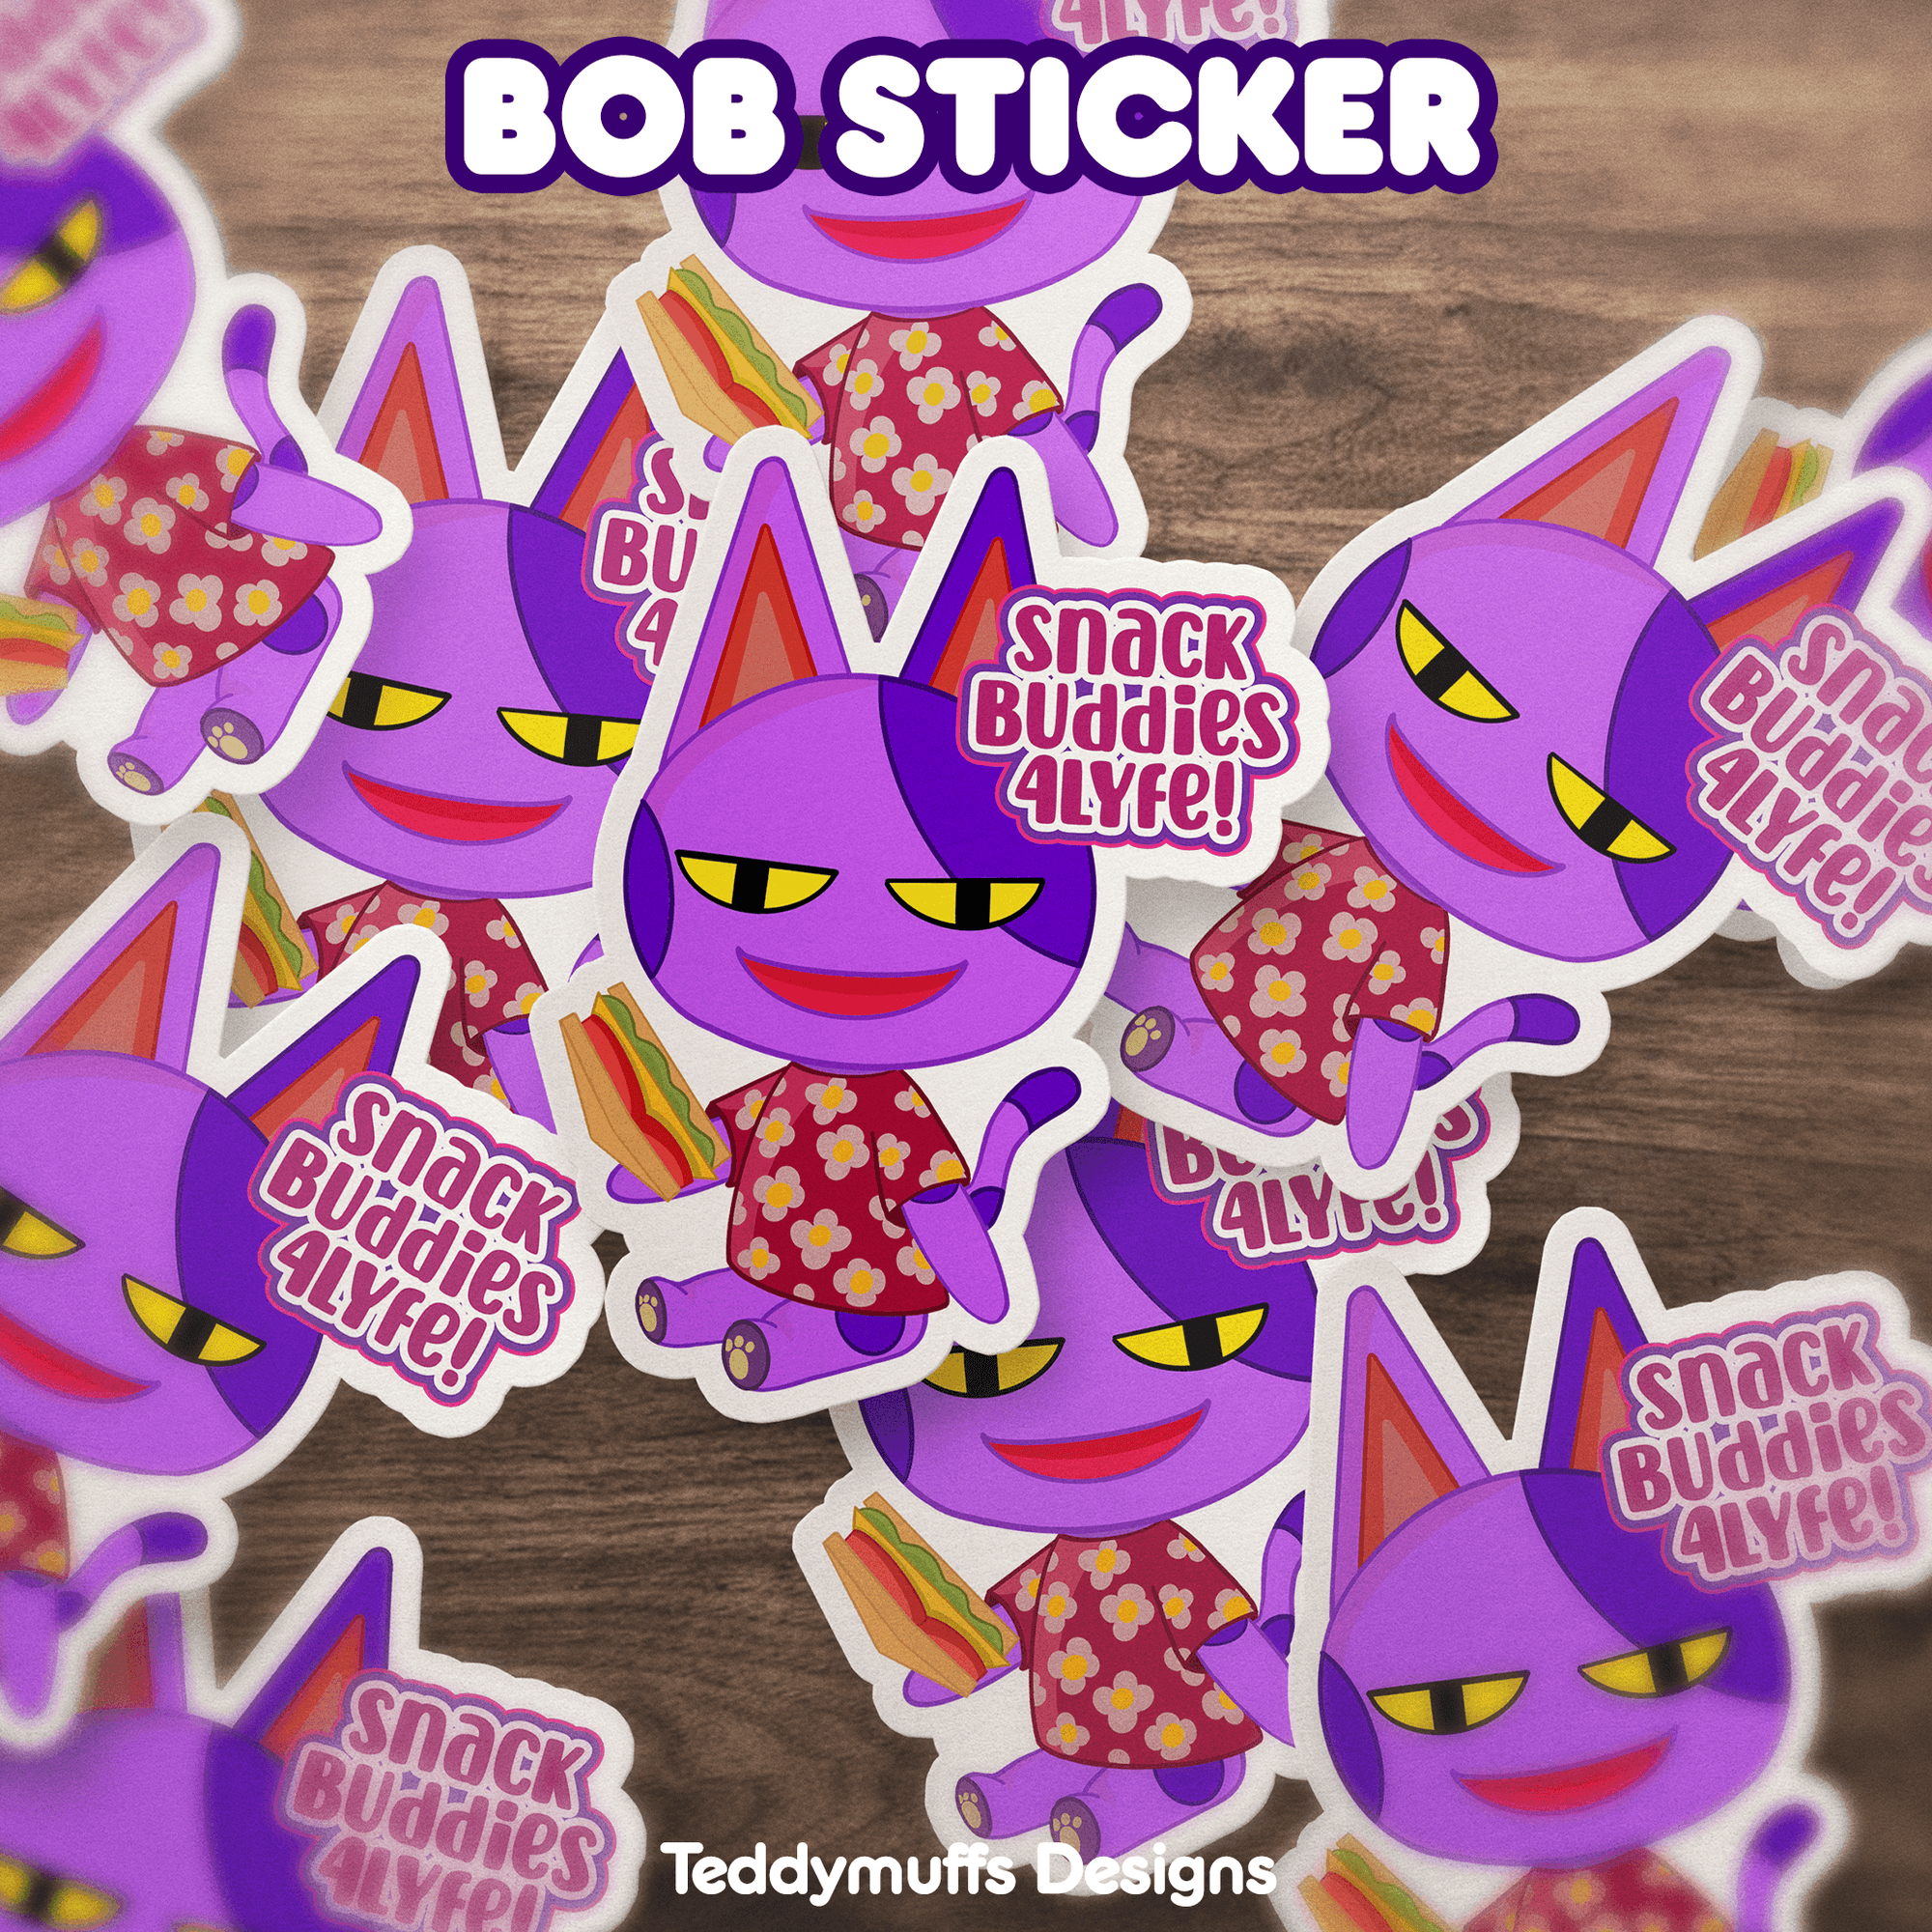 Bob "Snack Buddy" Sticker - Teddymuffs Designs